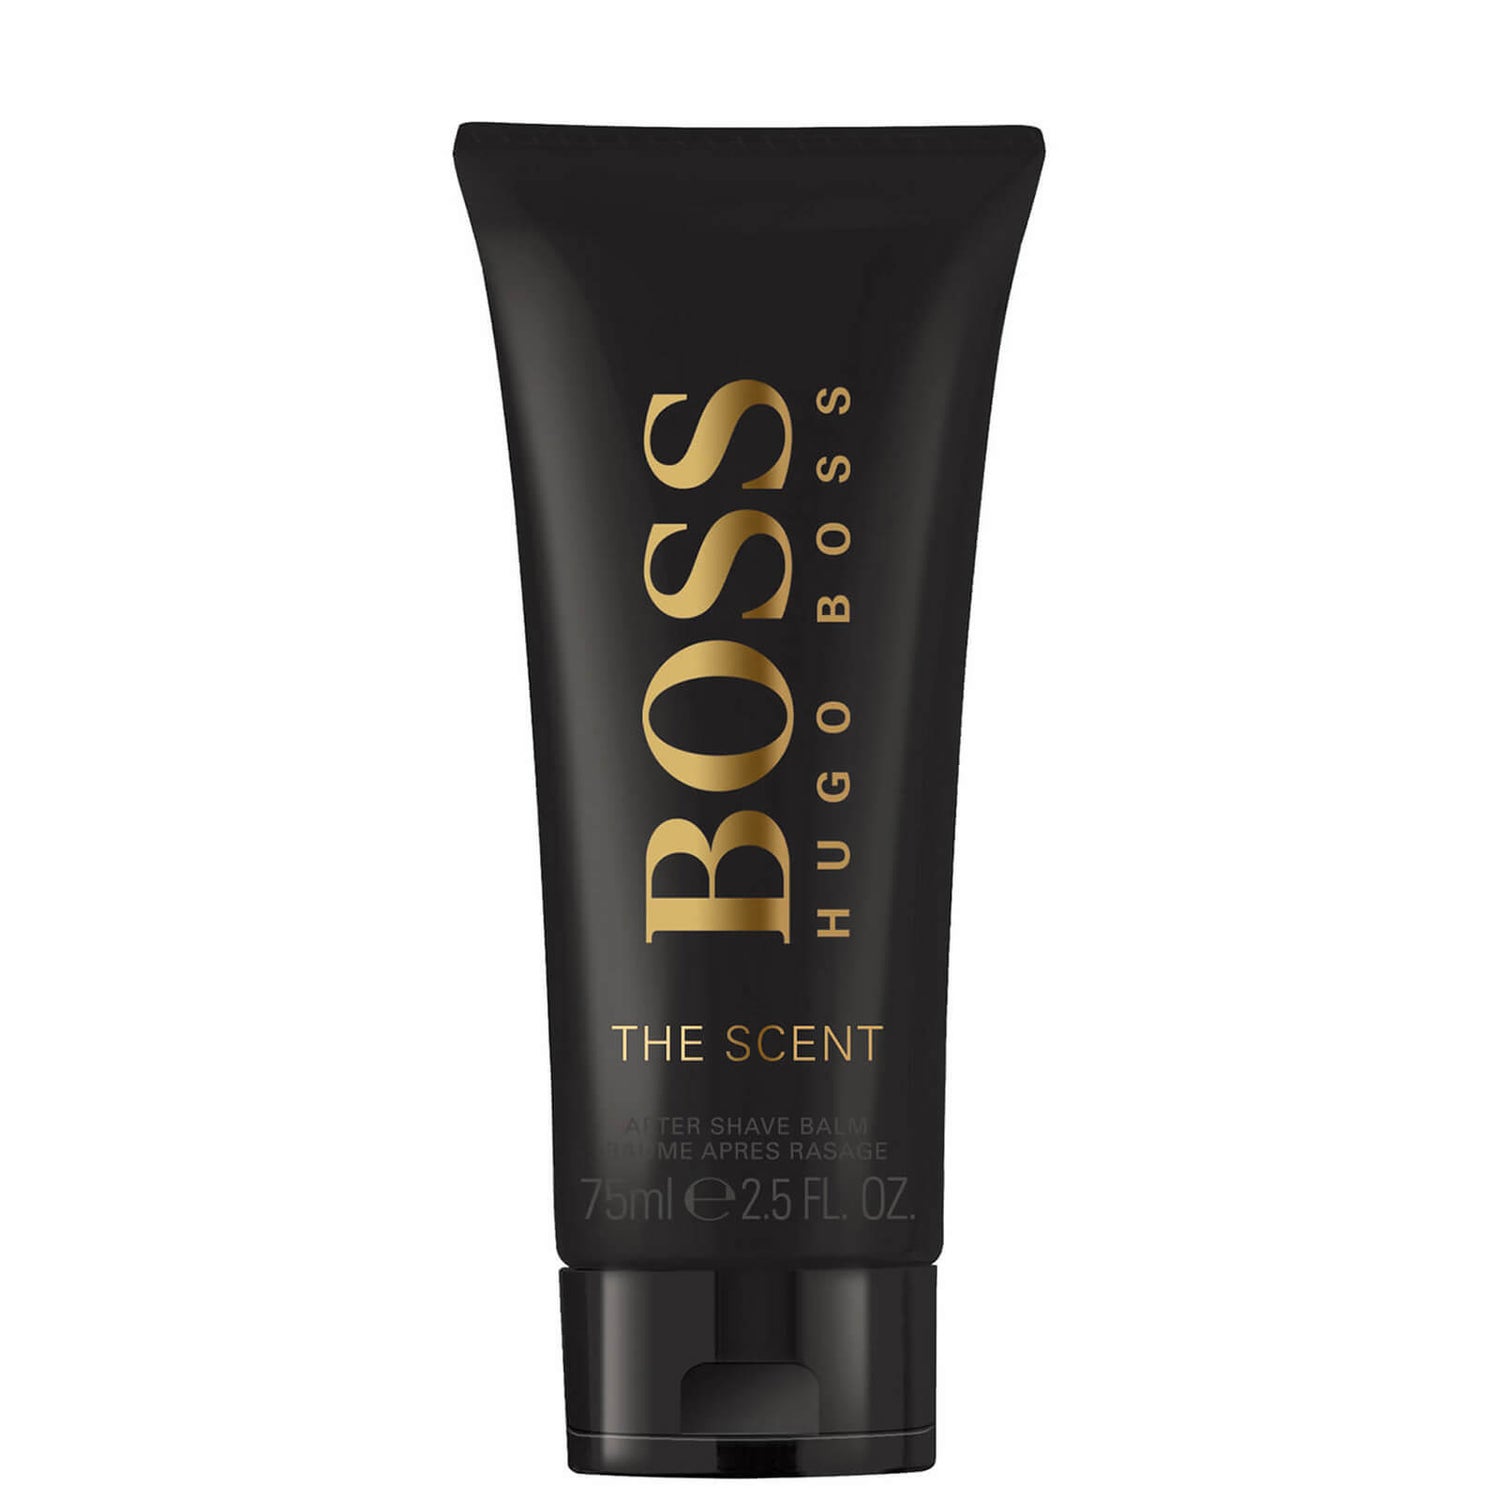 Hugo Boss The Scent After Shave Balm balsam po goleniu 75 ml